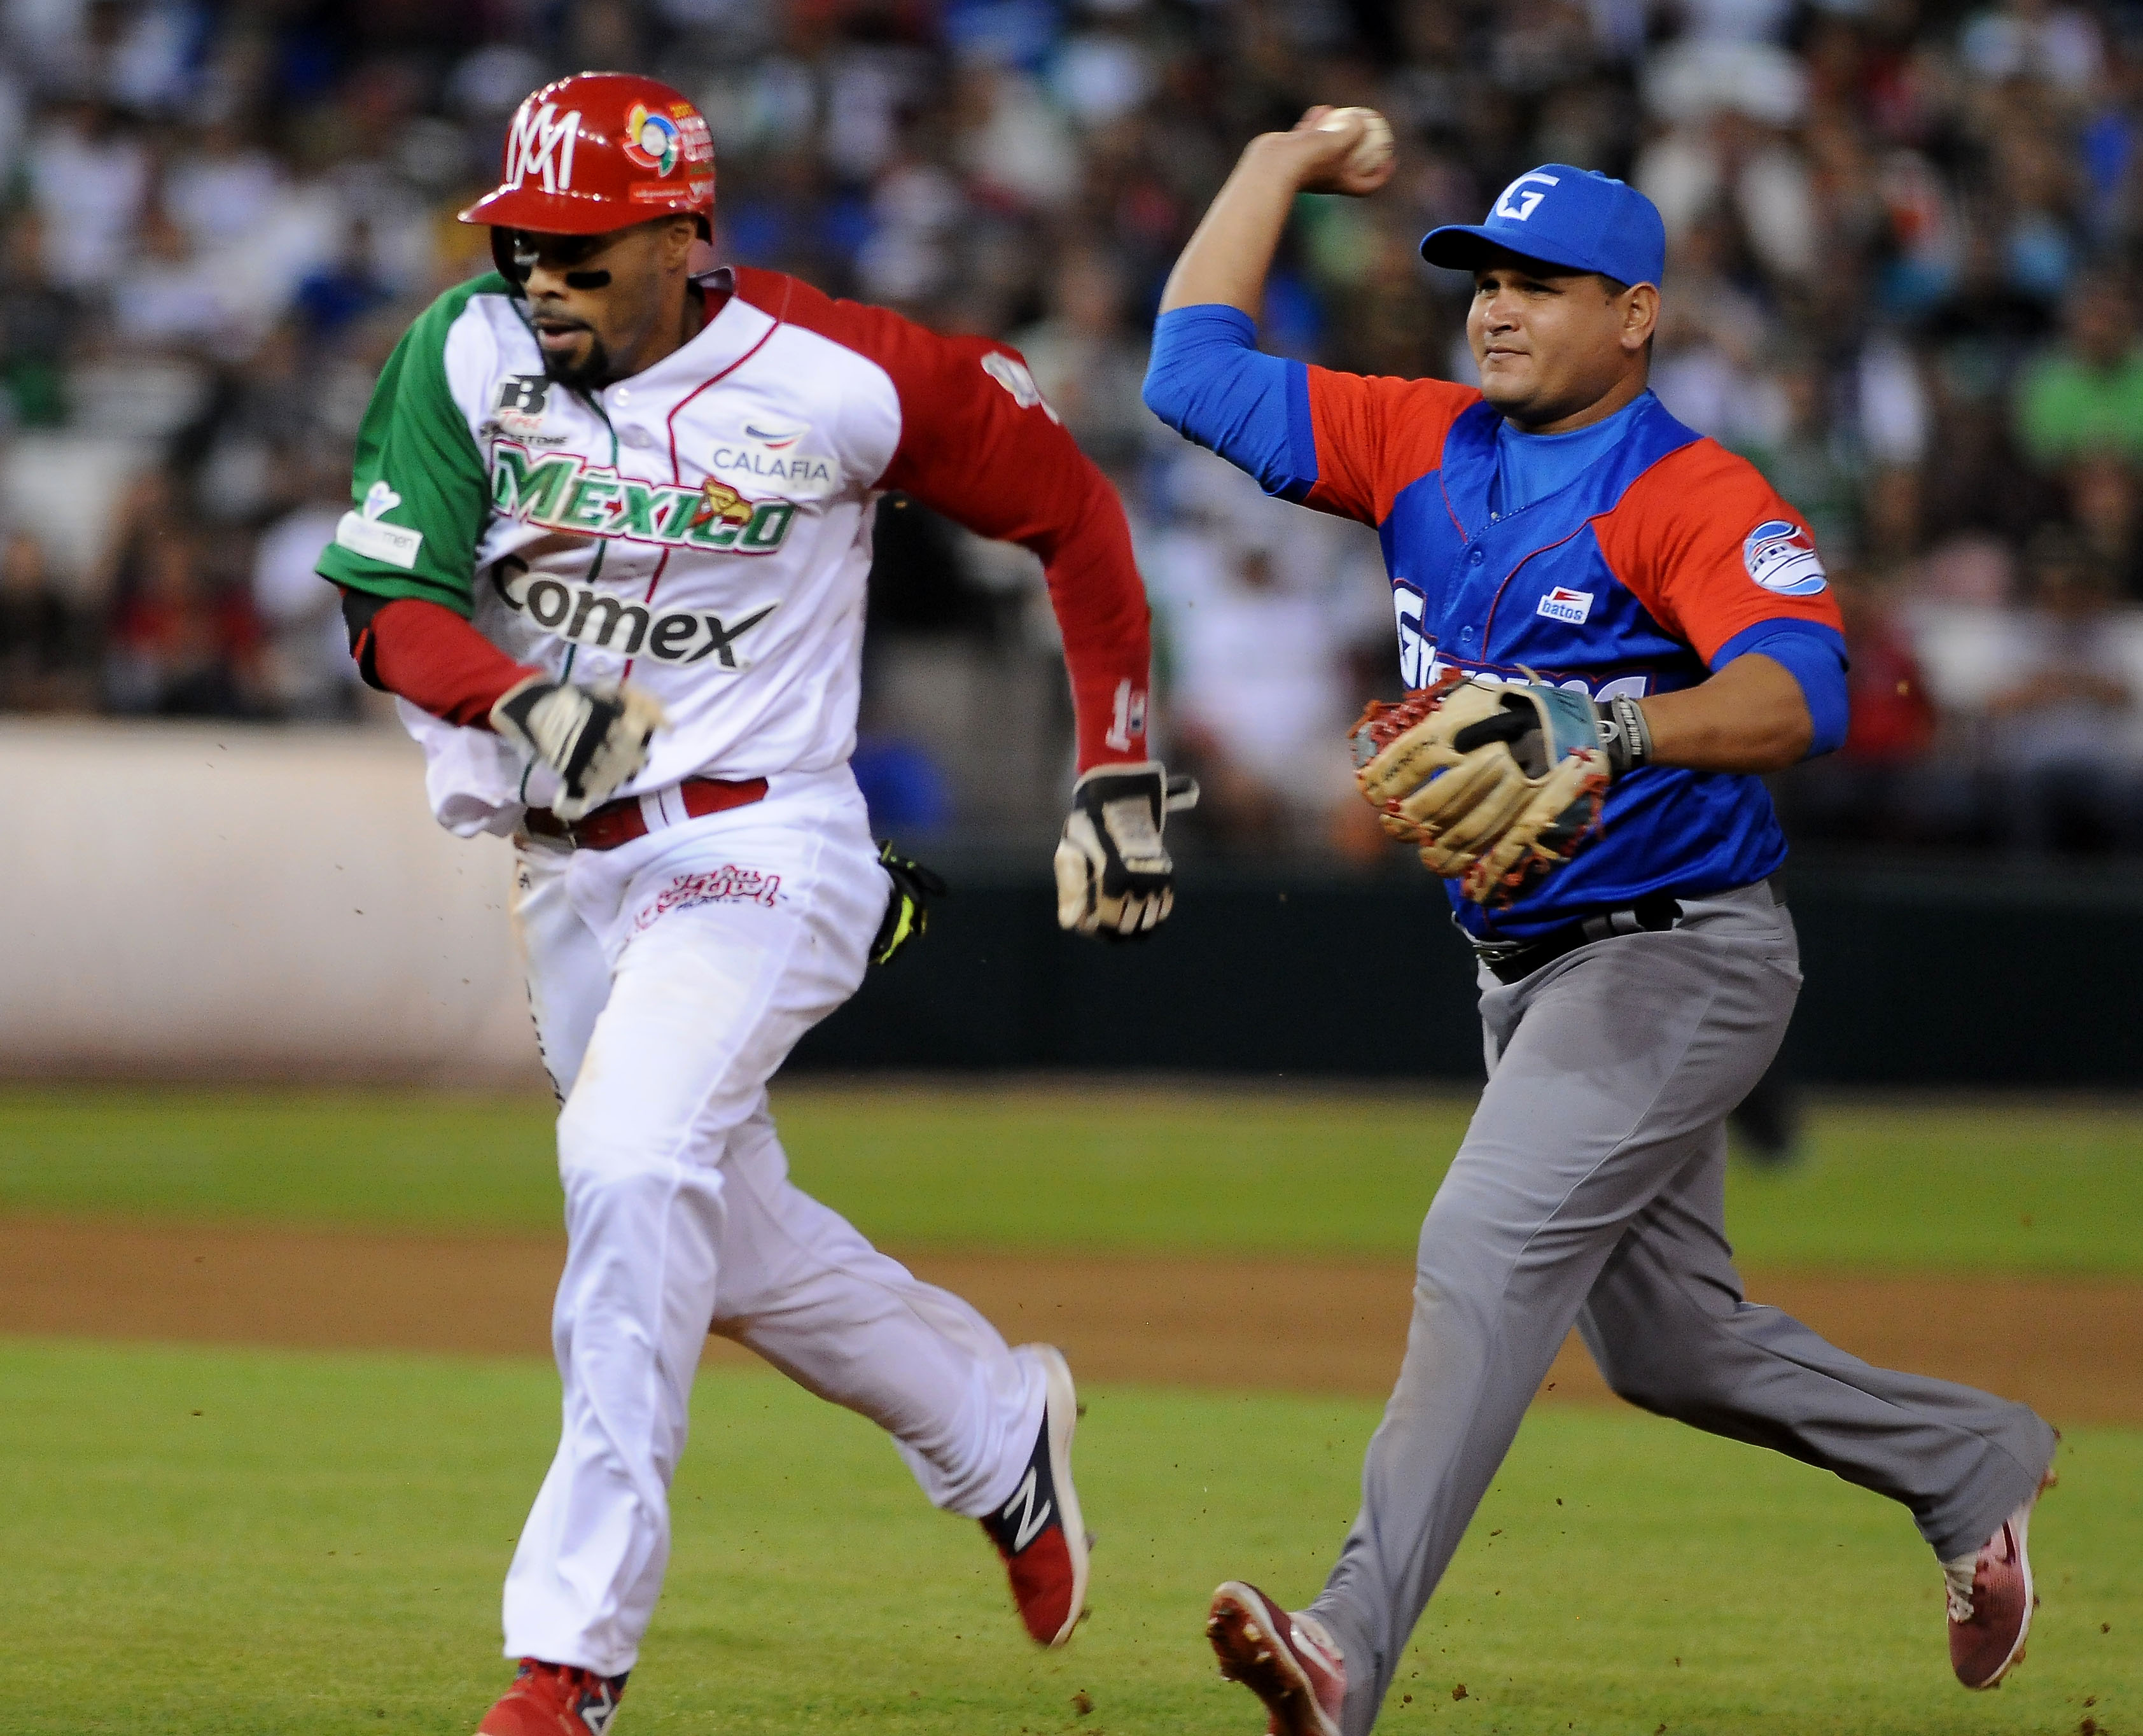 Semifinal Cuba-México en la Serie del Caribe. Foto: Ricardo Lópex Hevia